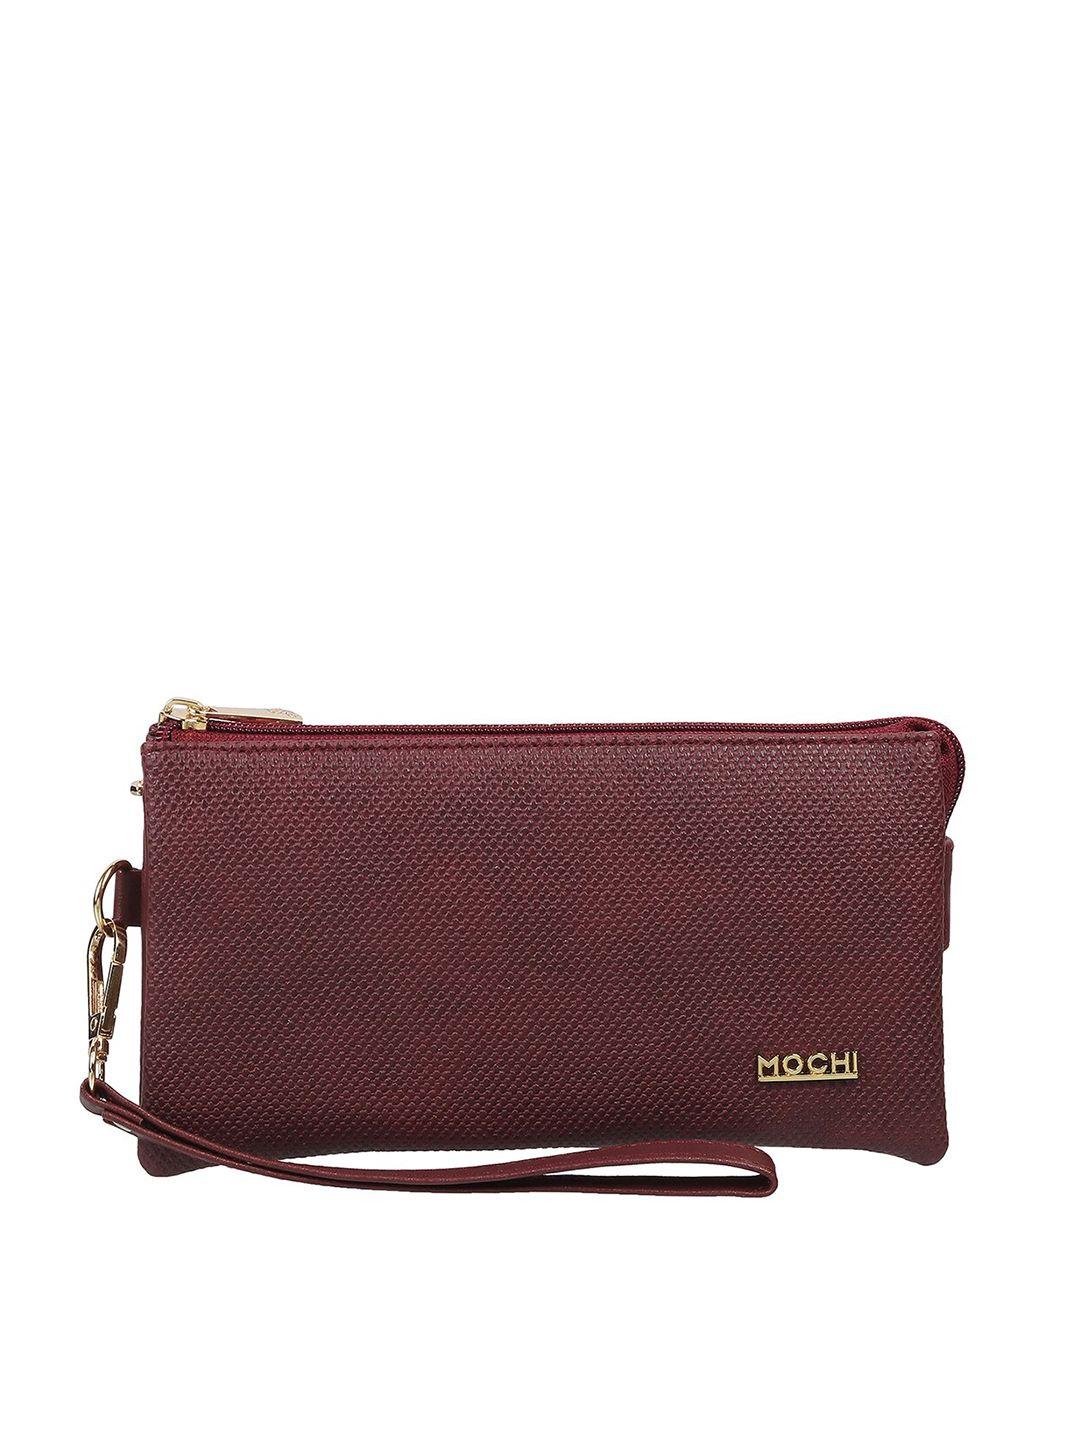 mochi burgundy textured purse clutch